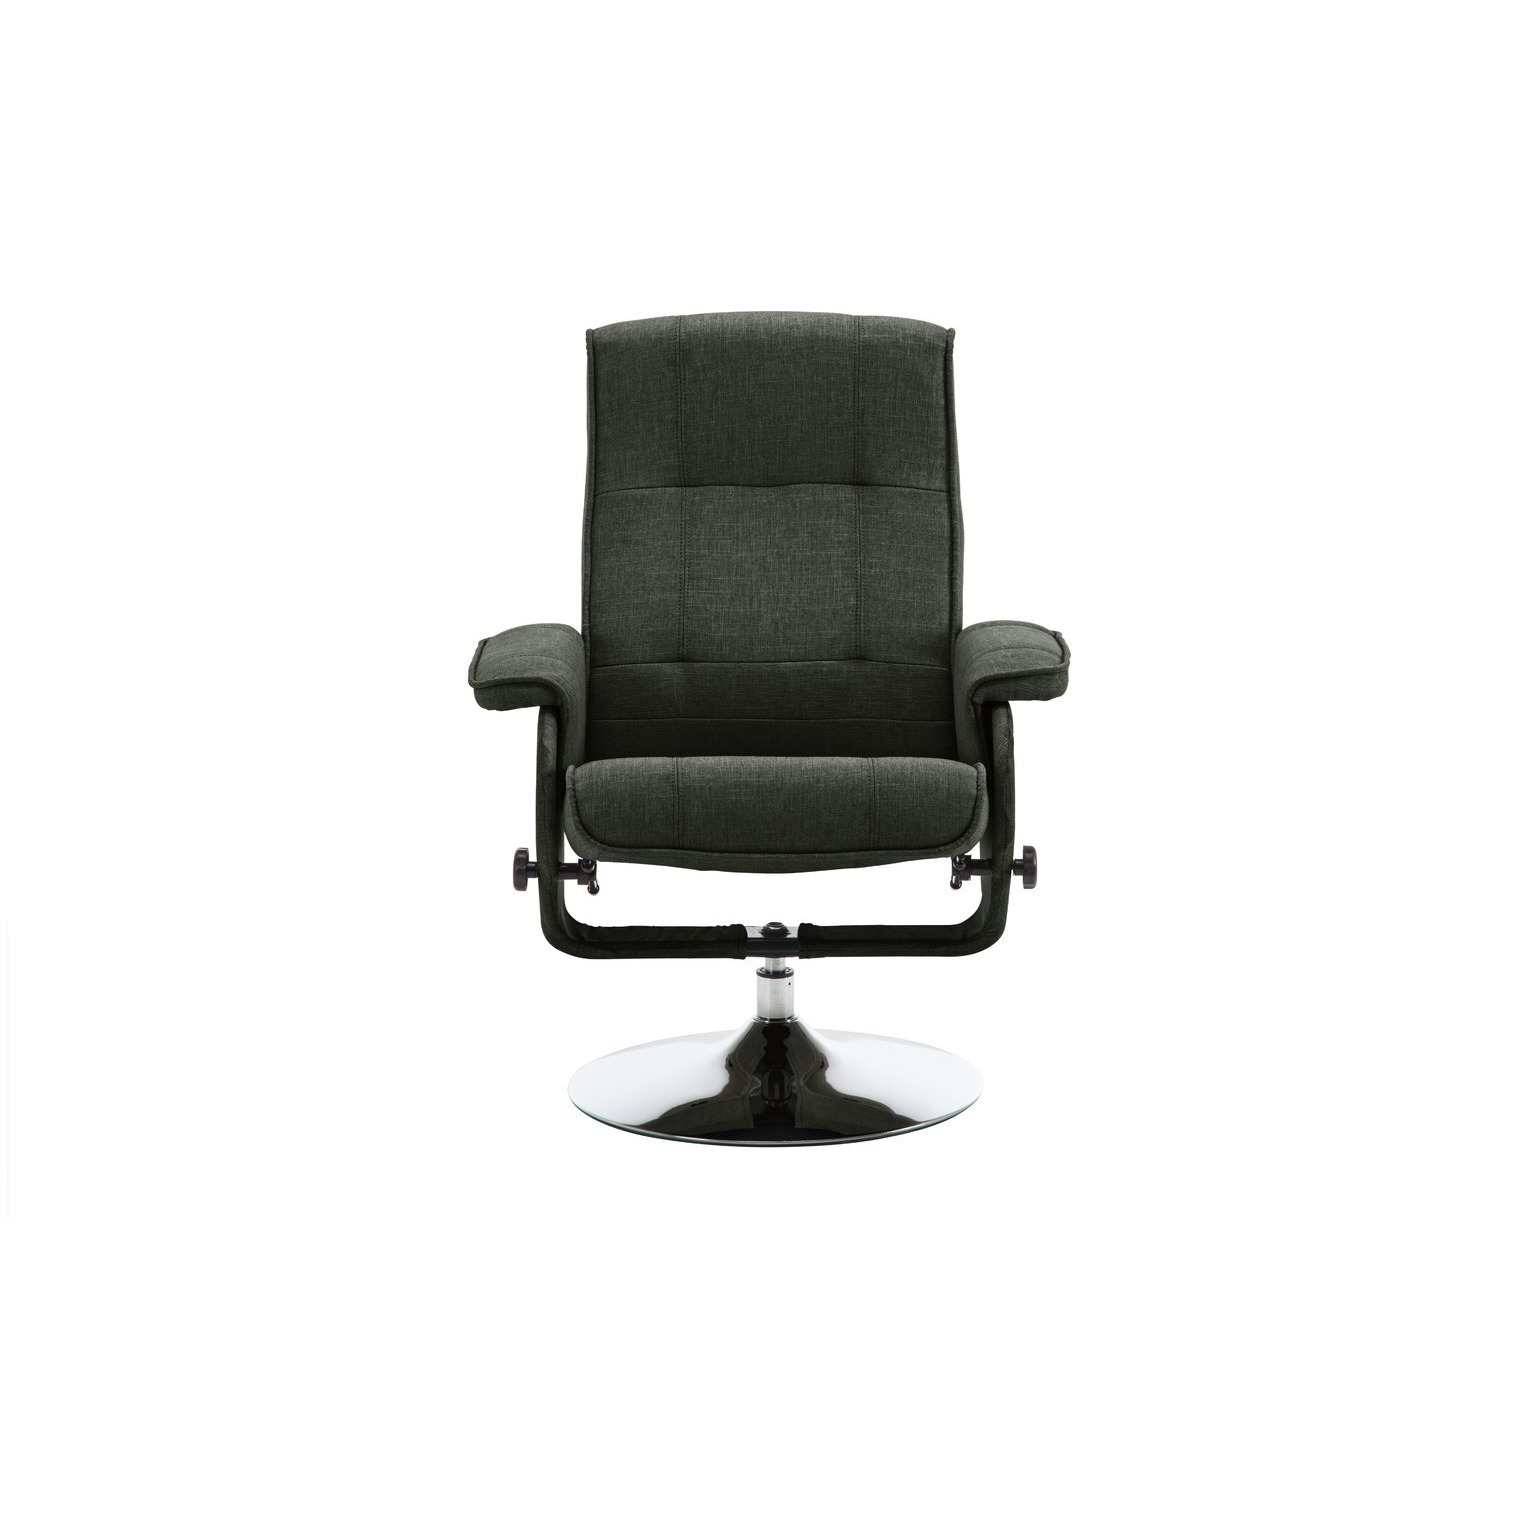 Argos Home Rowan Fabric Swivel Chair with Footstool-Charcoal - image 1